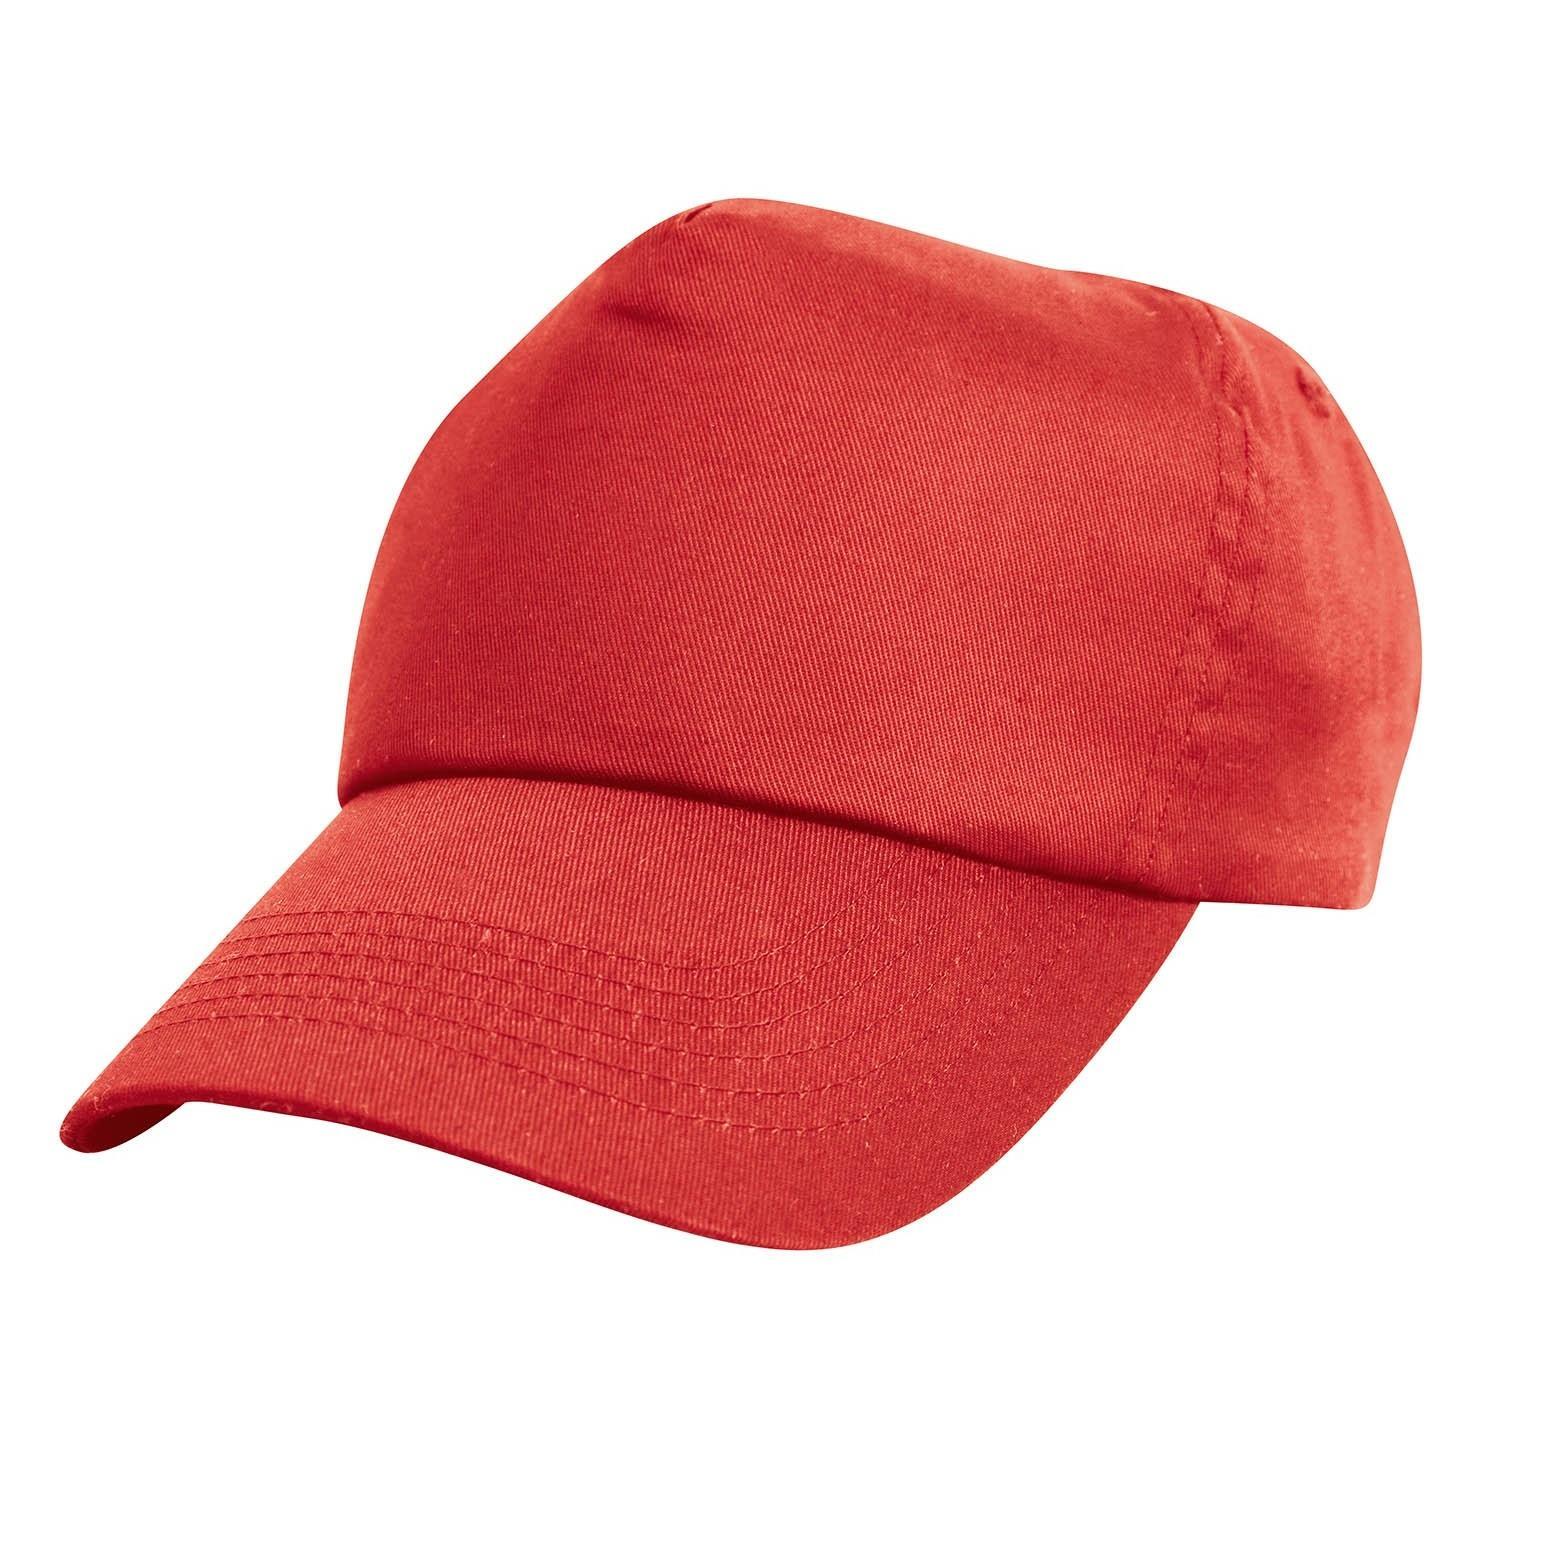 Result Unisex Childrens/Kids Plain Basebll Cap (Red) (One Size)